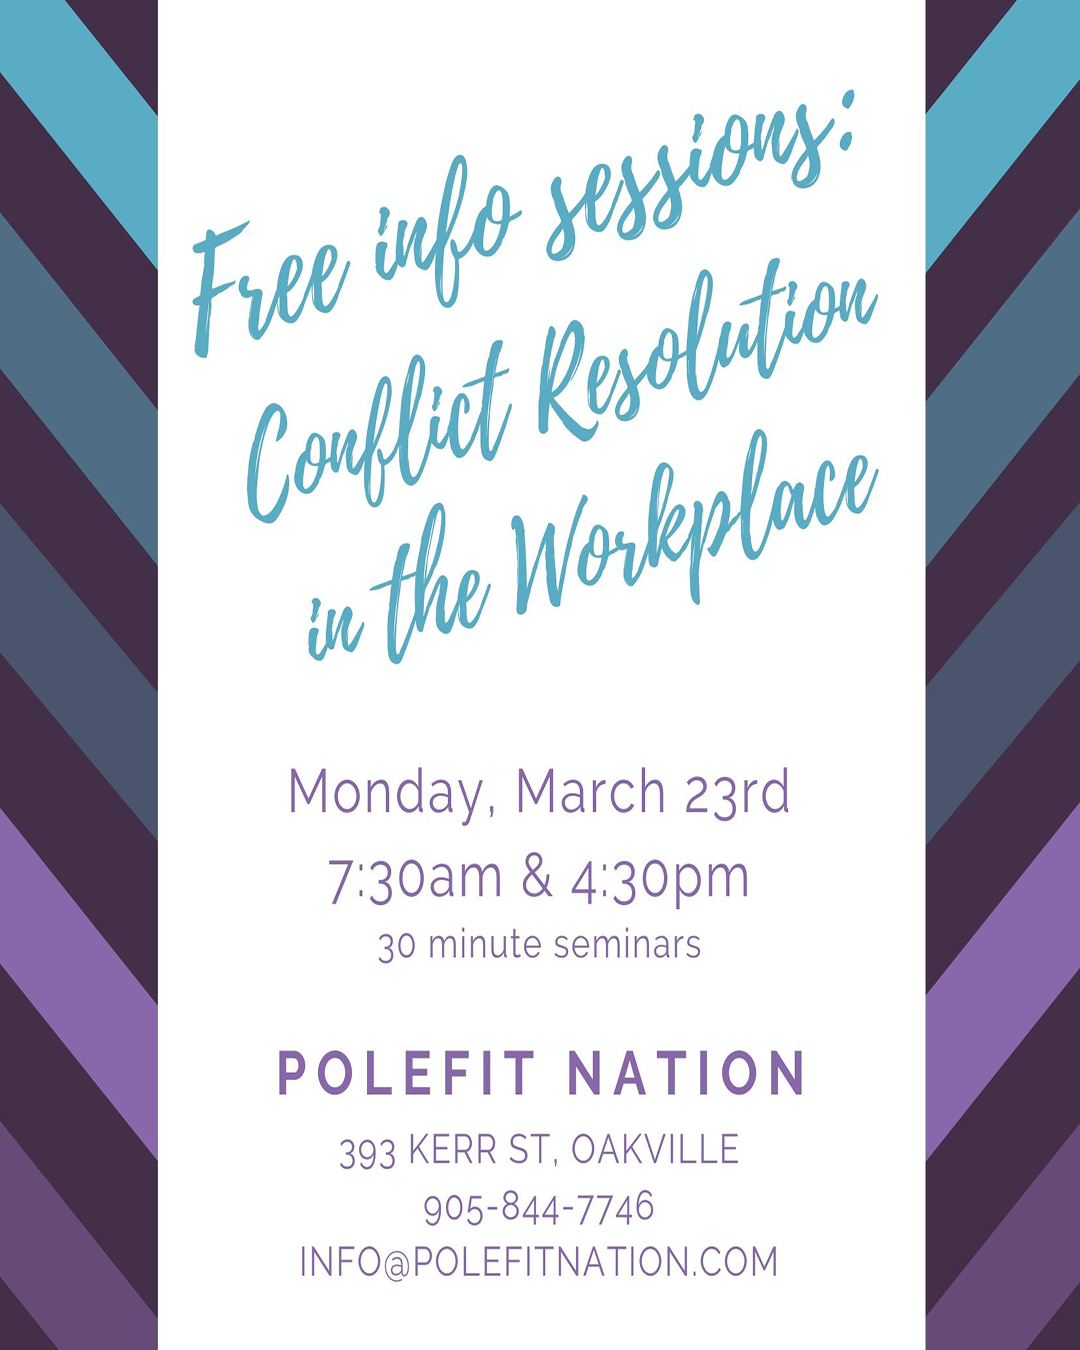 Free Conflict Resolution seminars at PoleFit Nation